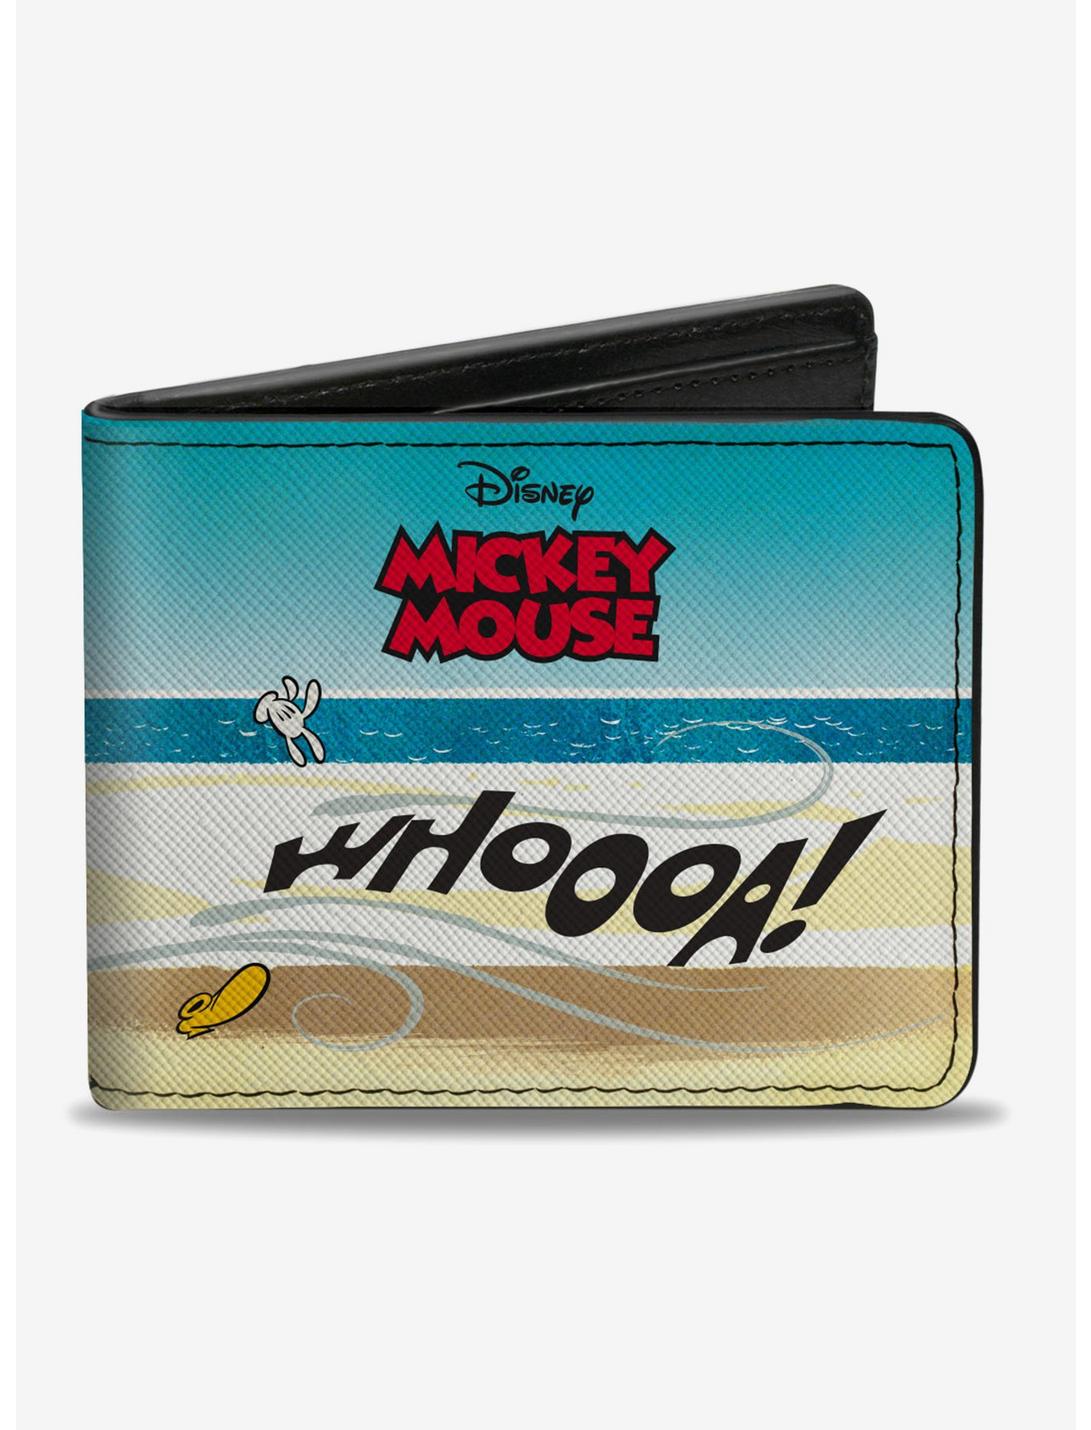 Disney Mickey Mouse Blown Away Whoa Bifold Wallet, , hi-res